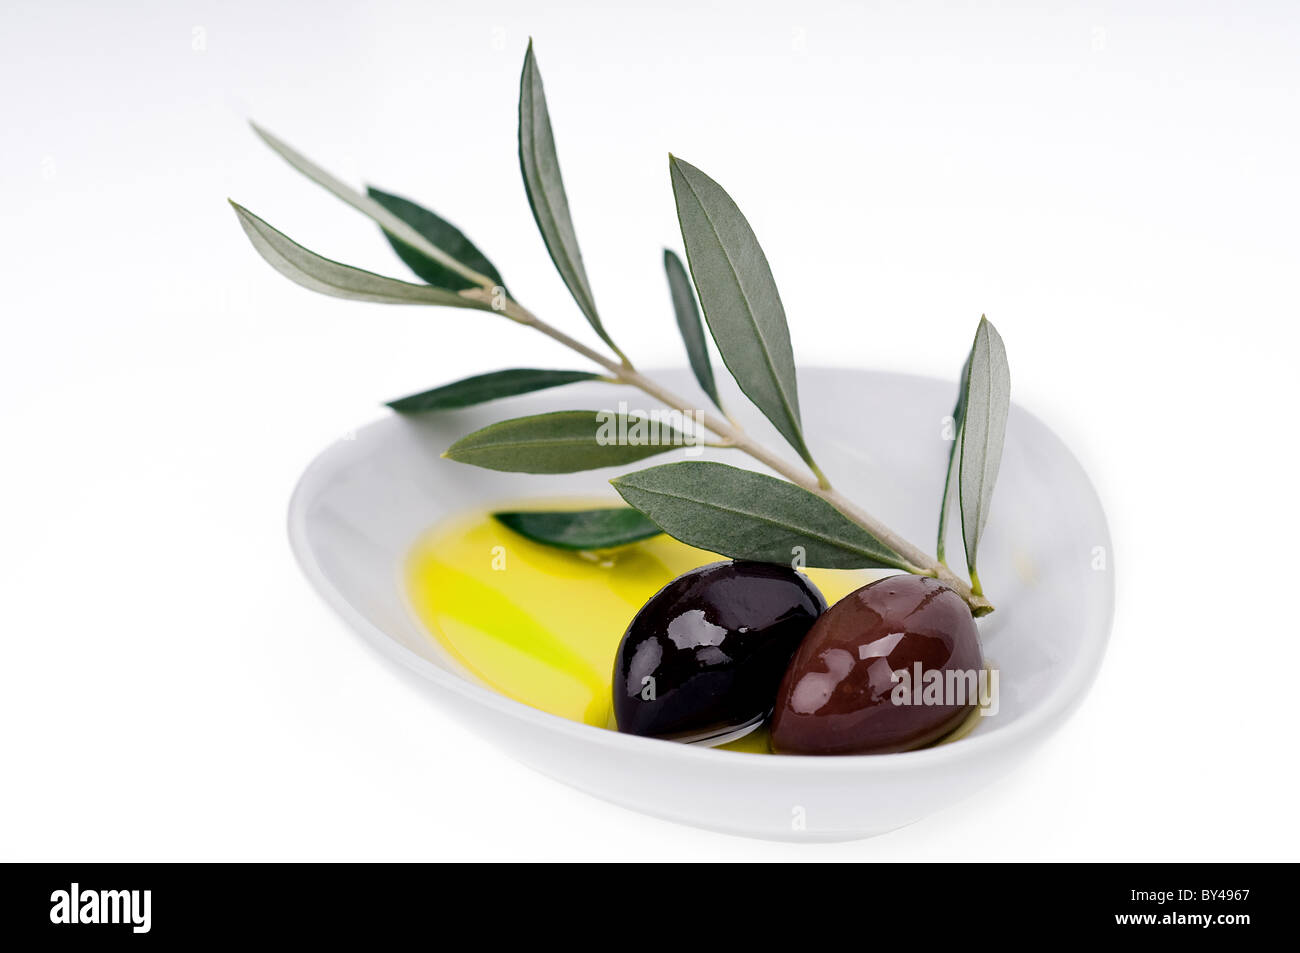 Piastra con due olive nere kalamon ( Kalamata) sul ramo e sfondo bianco Foto Stock